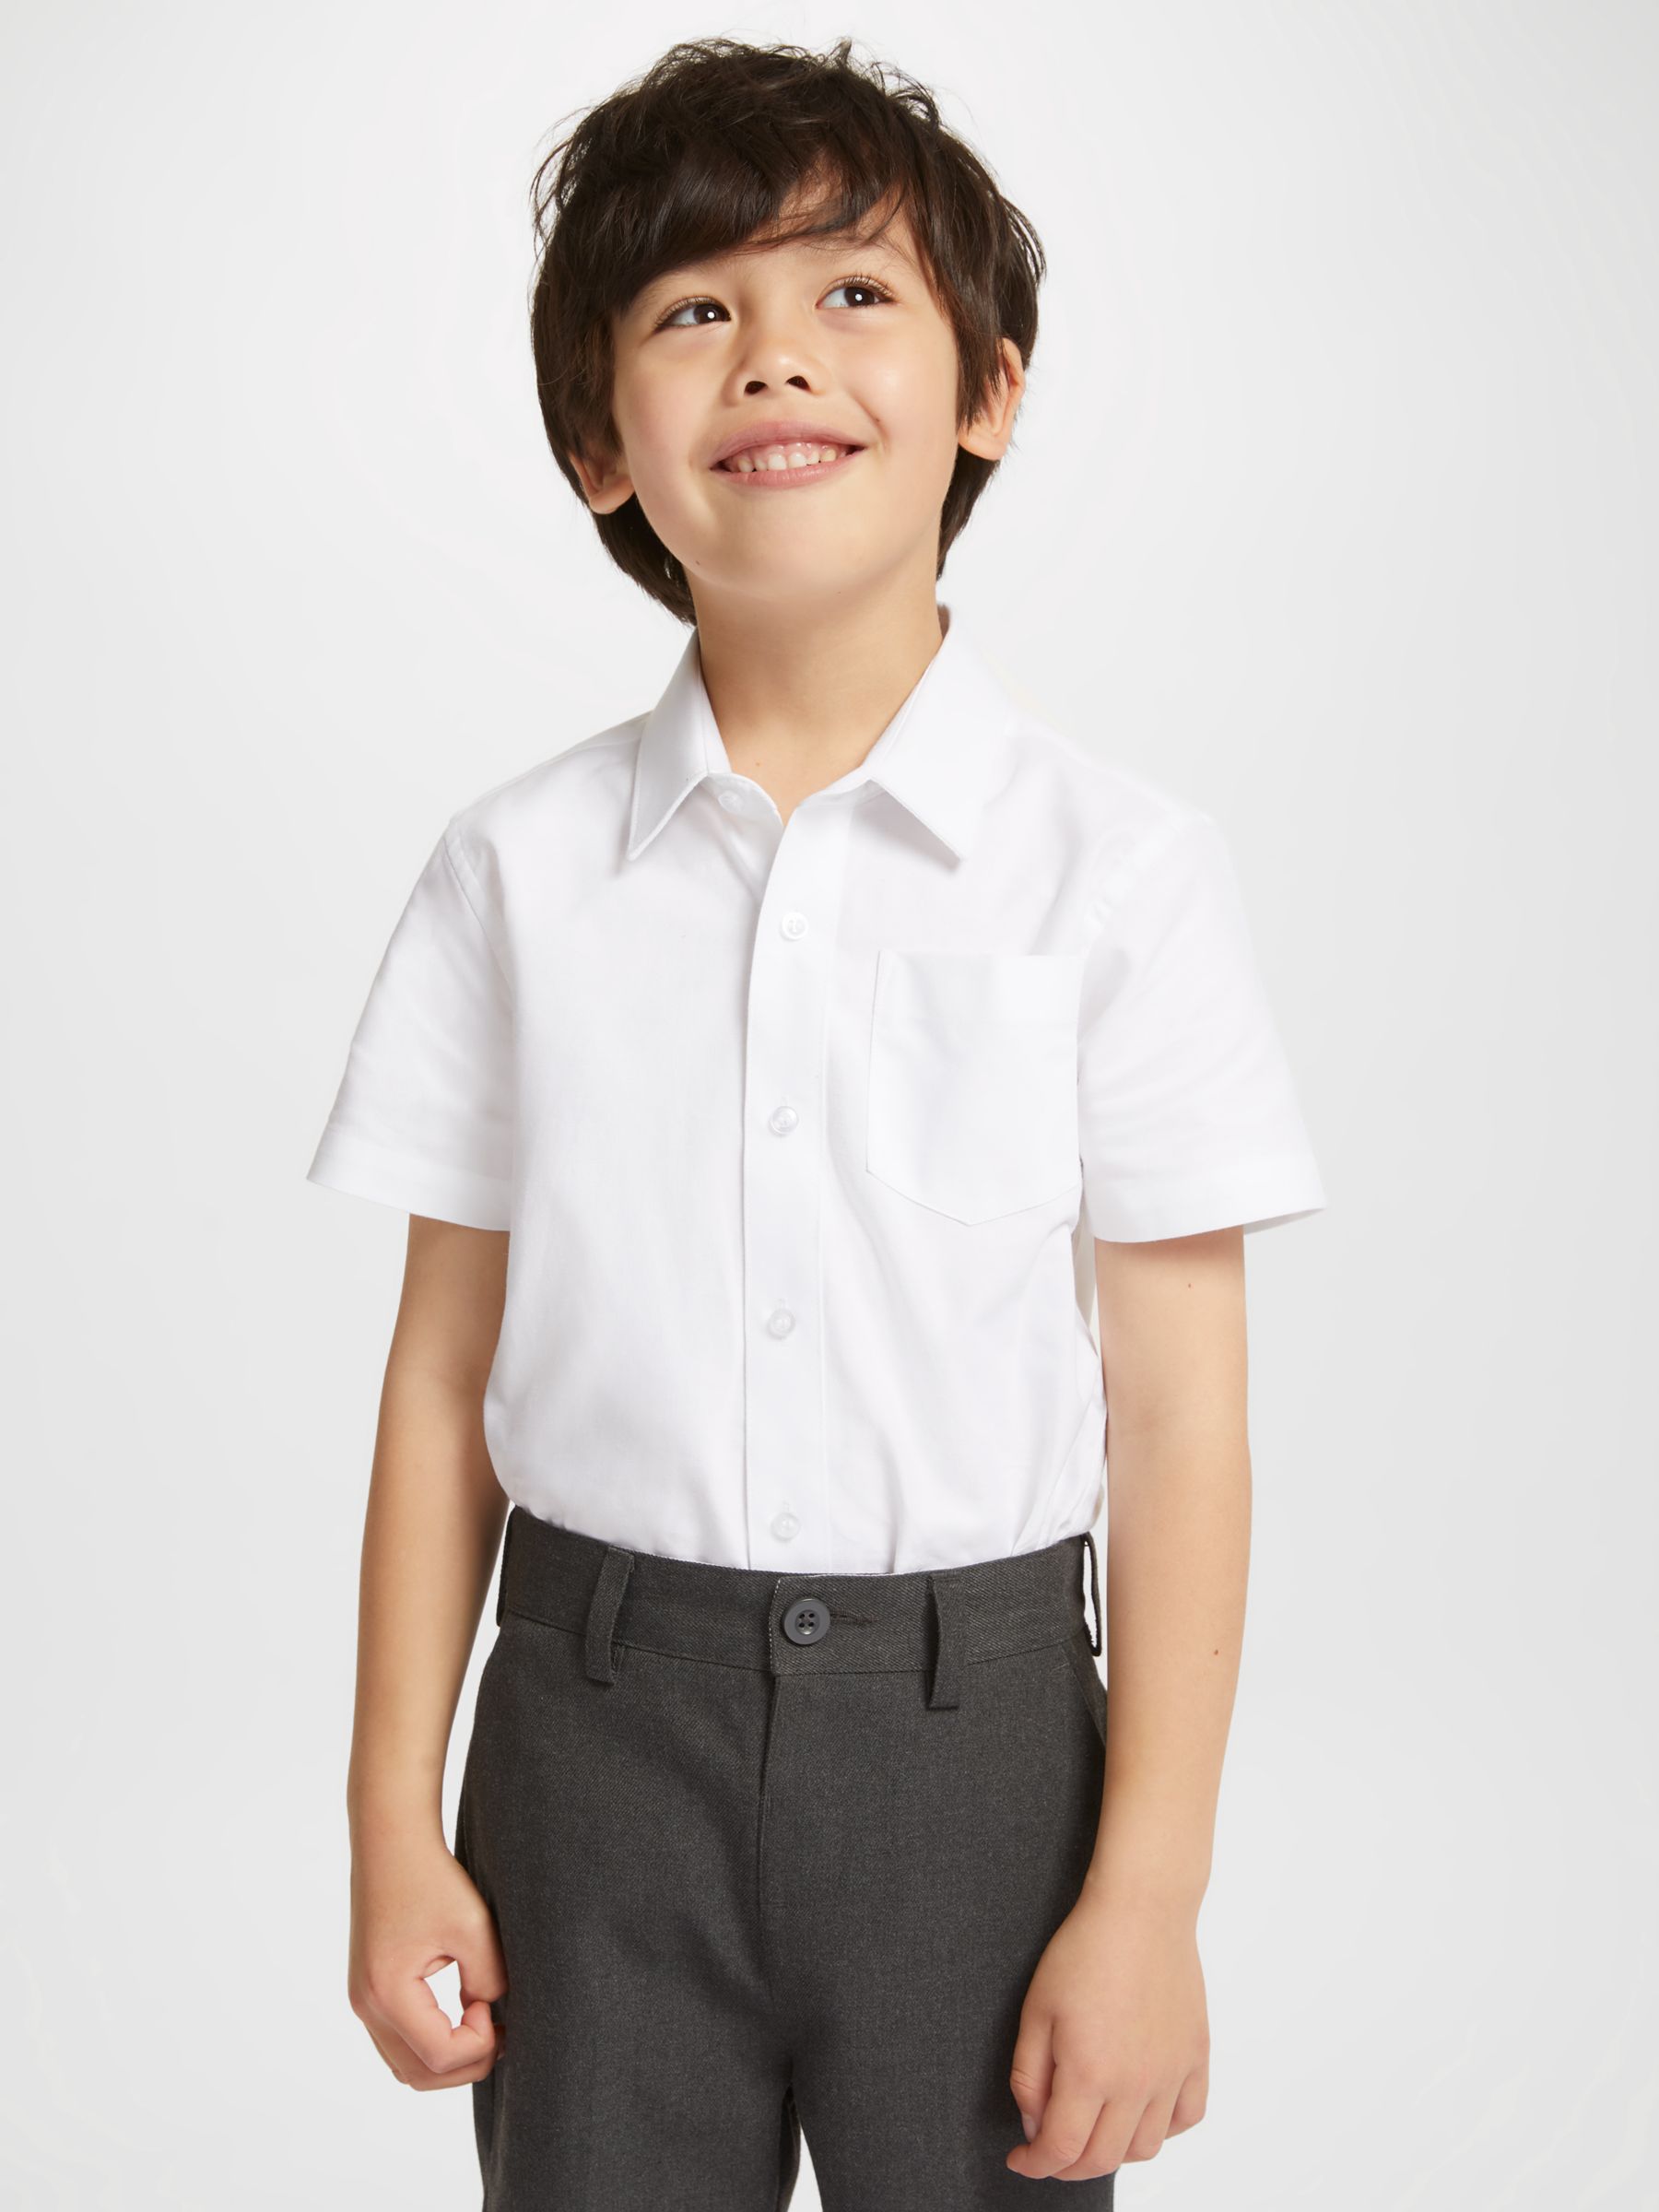 Buy John Lewis GOTS Organic Cotton Short Sleeve School Shirt, Pack of 2 Online at johnlewis.com